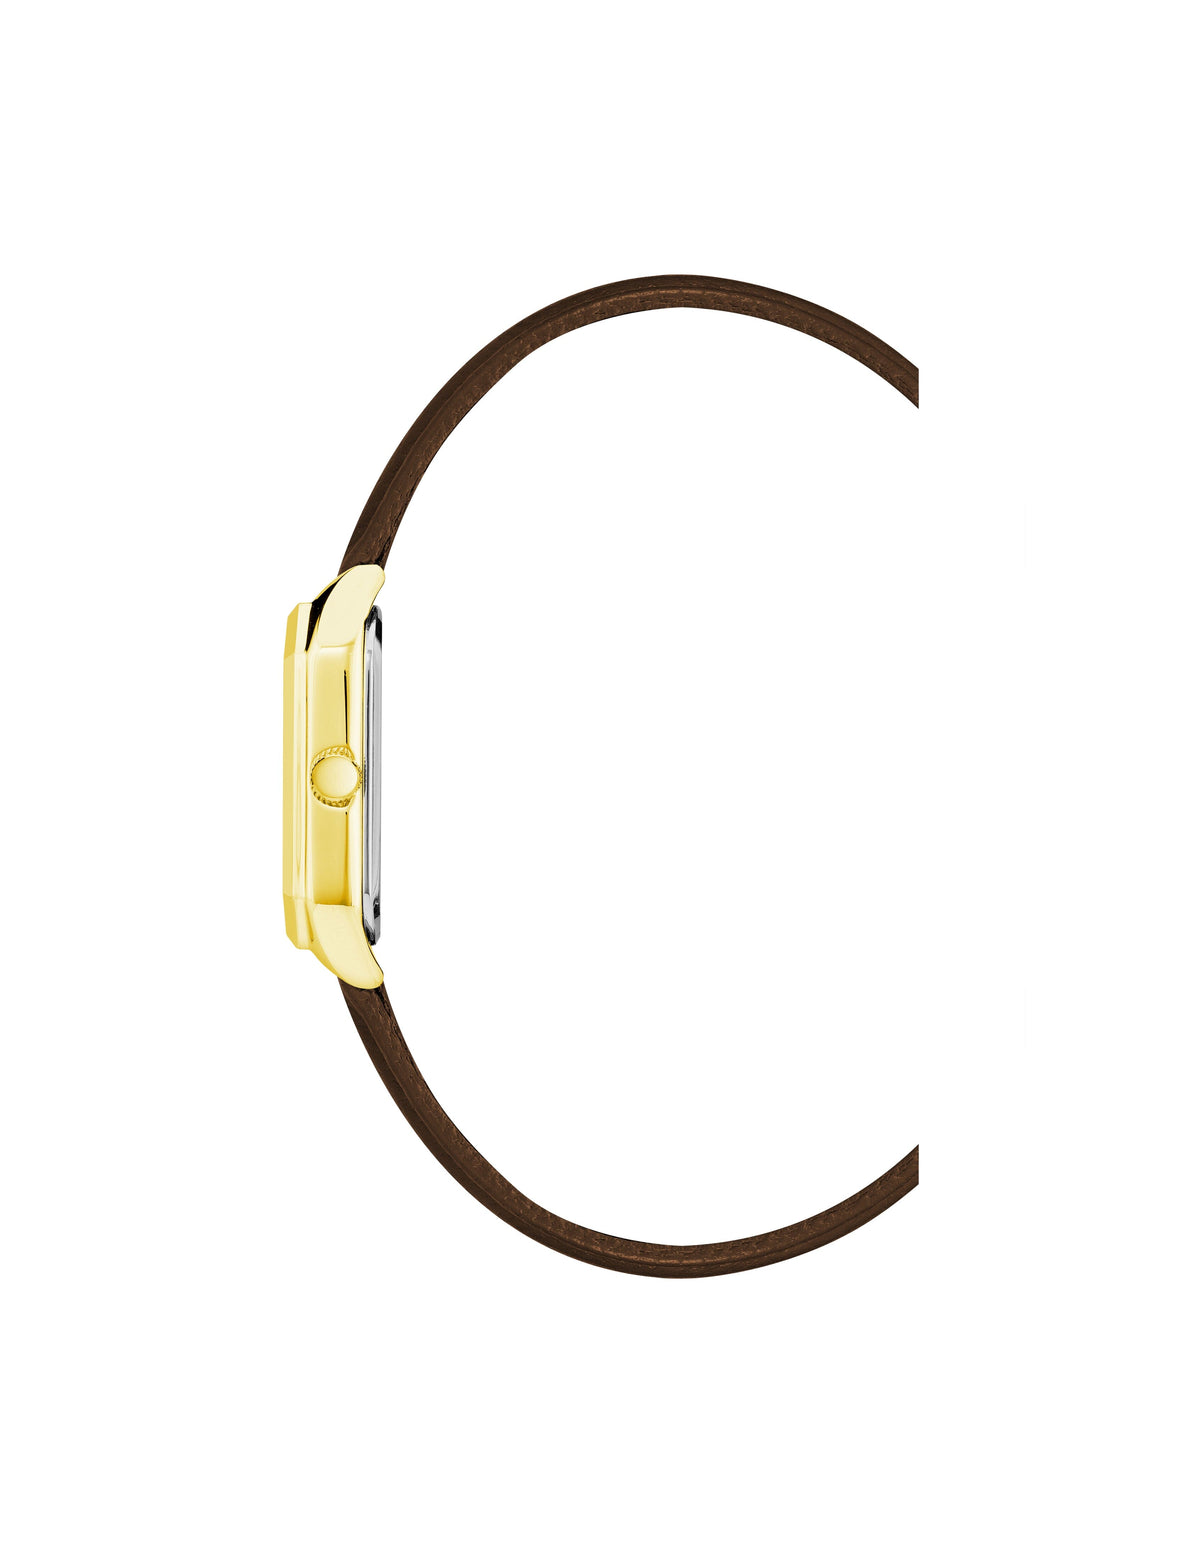 Anne Klein  Octagonal Shaped Leather Strap Watch